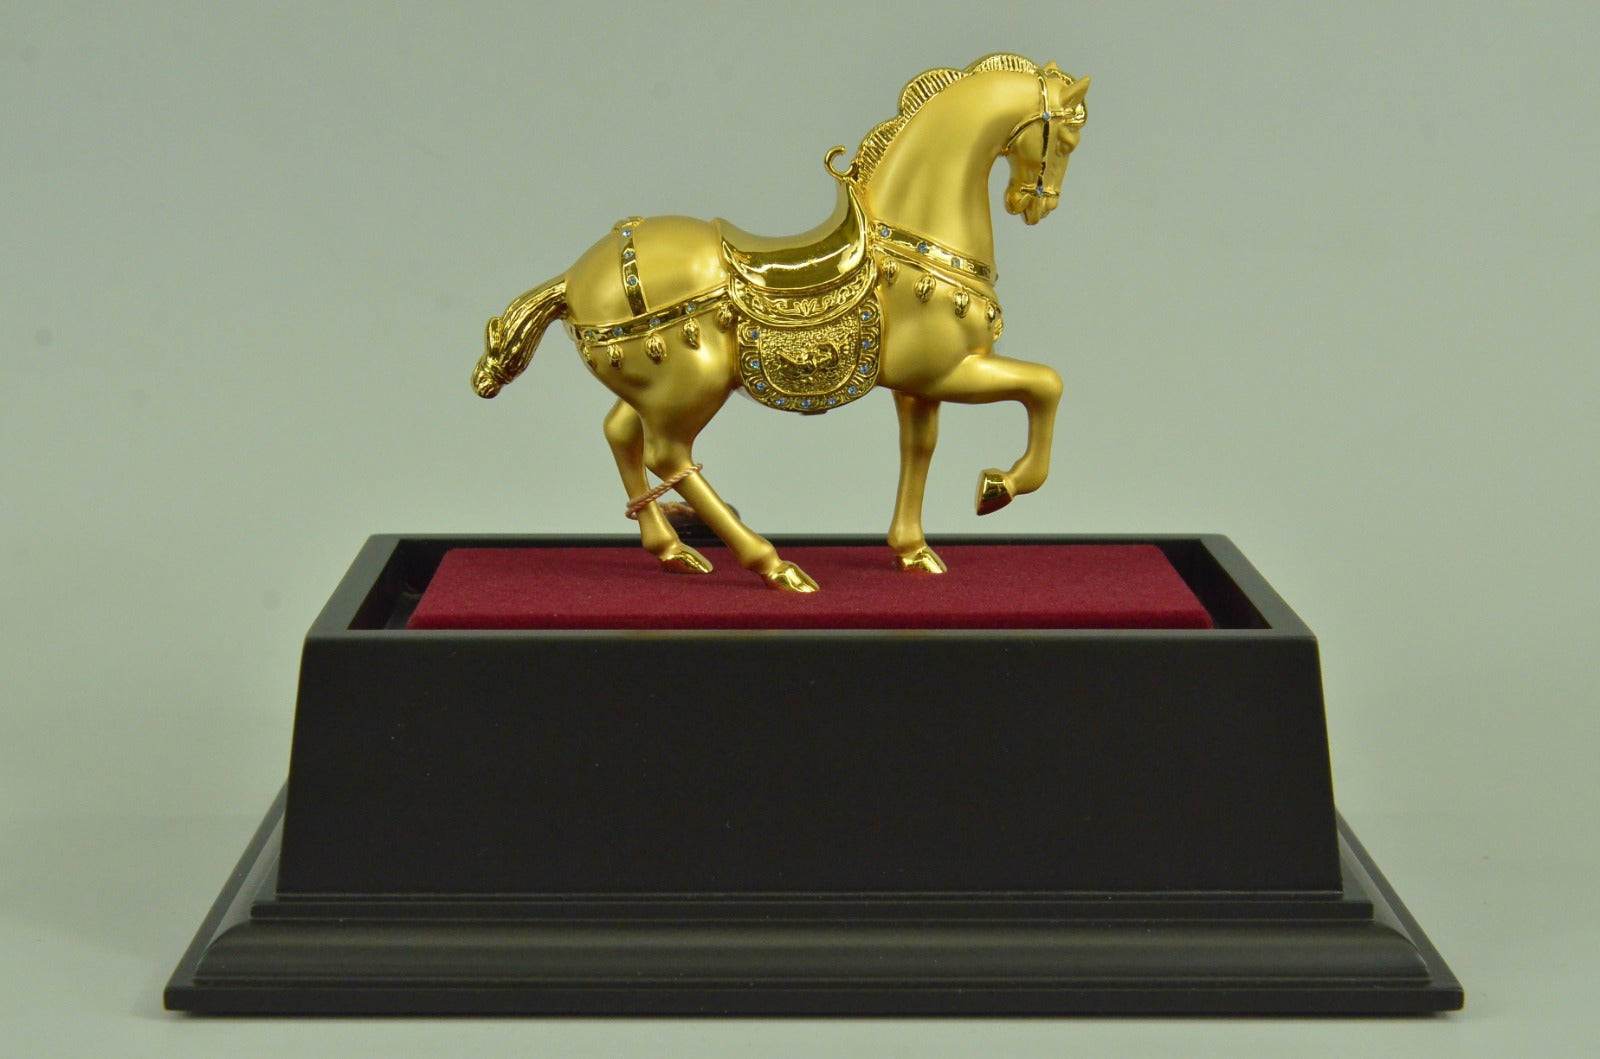 Hot cast by Lost Wax 24K Gold Tang Horse Bronze Sculpture Figurine Figure Decor